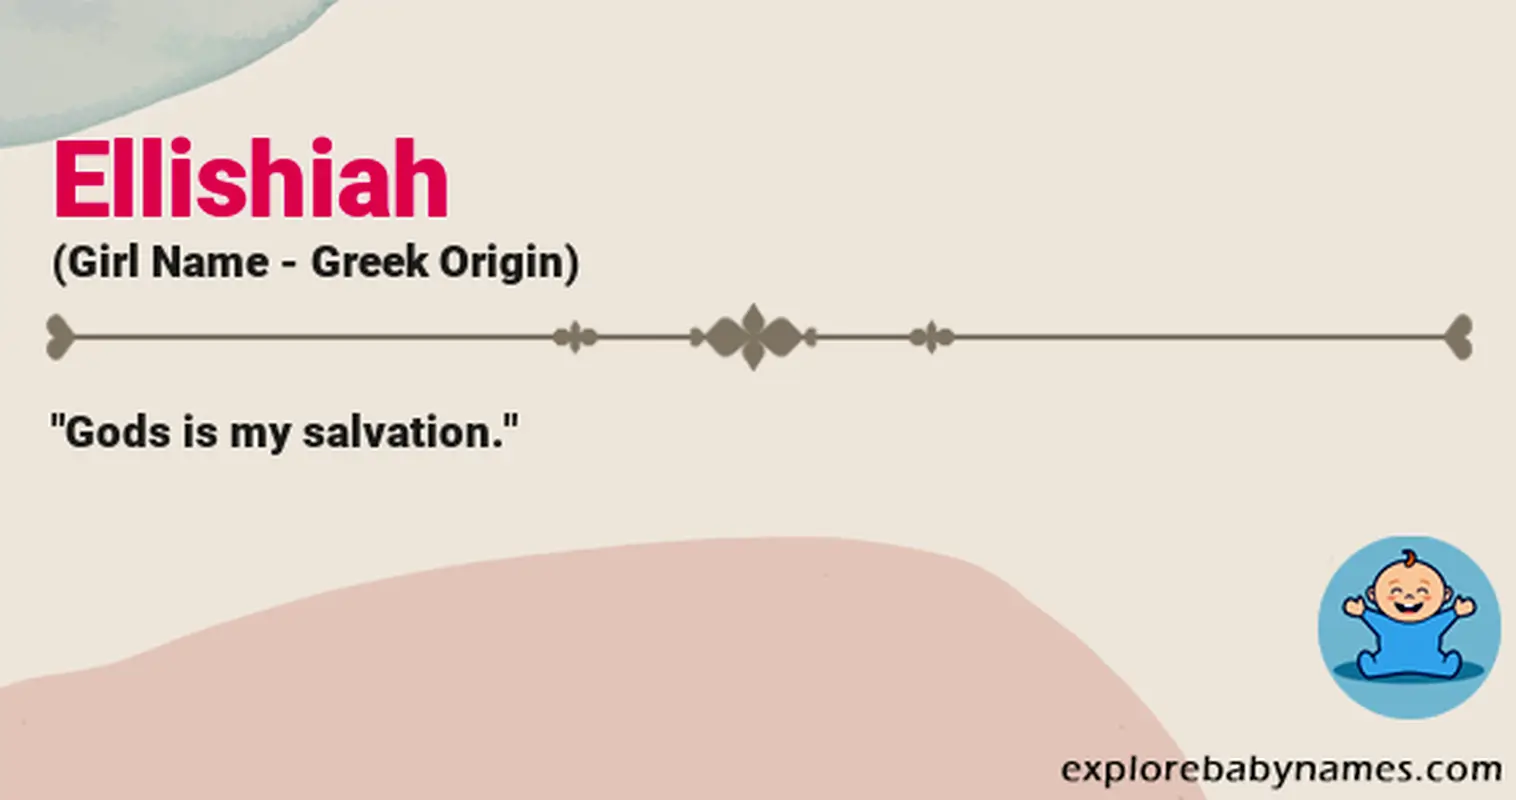 Meaning of Ellishiah